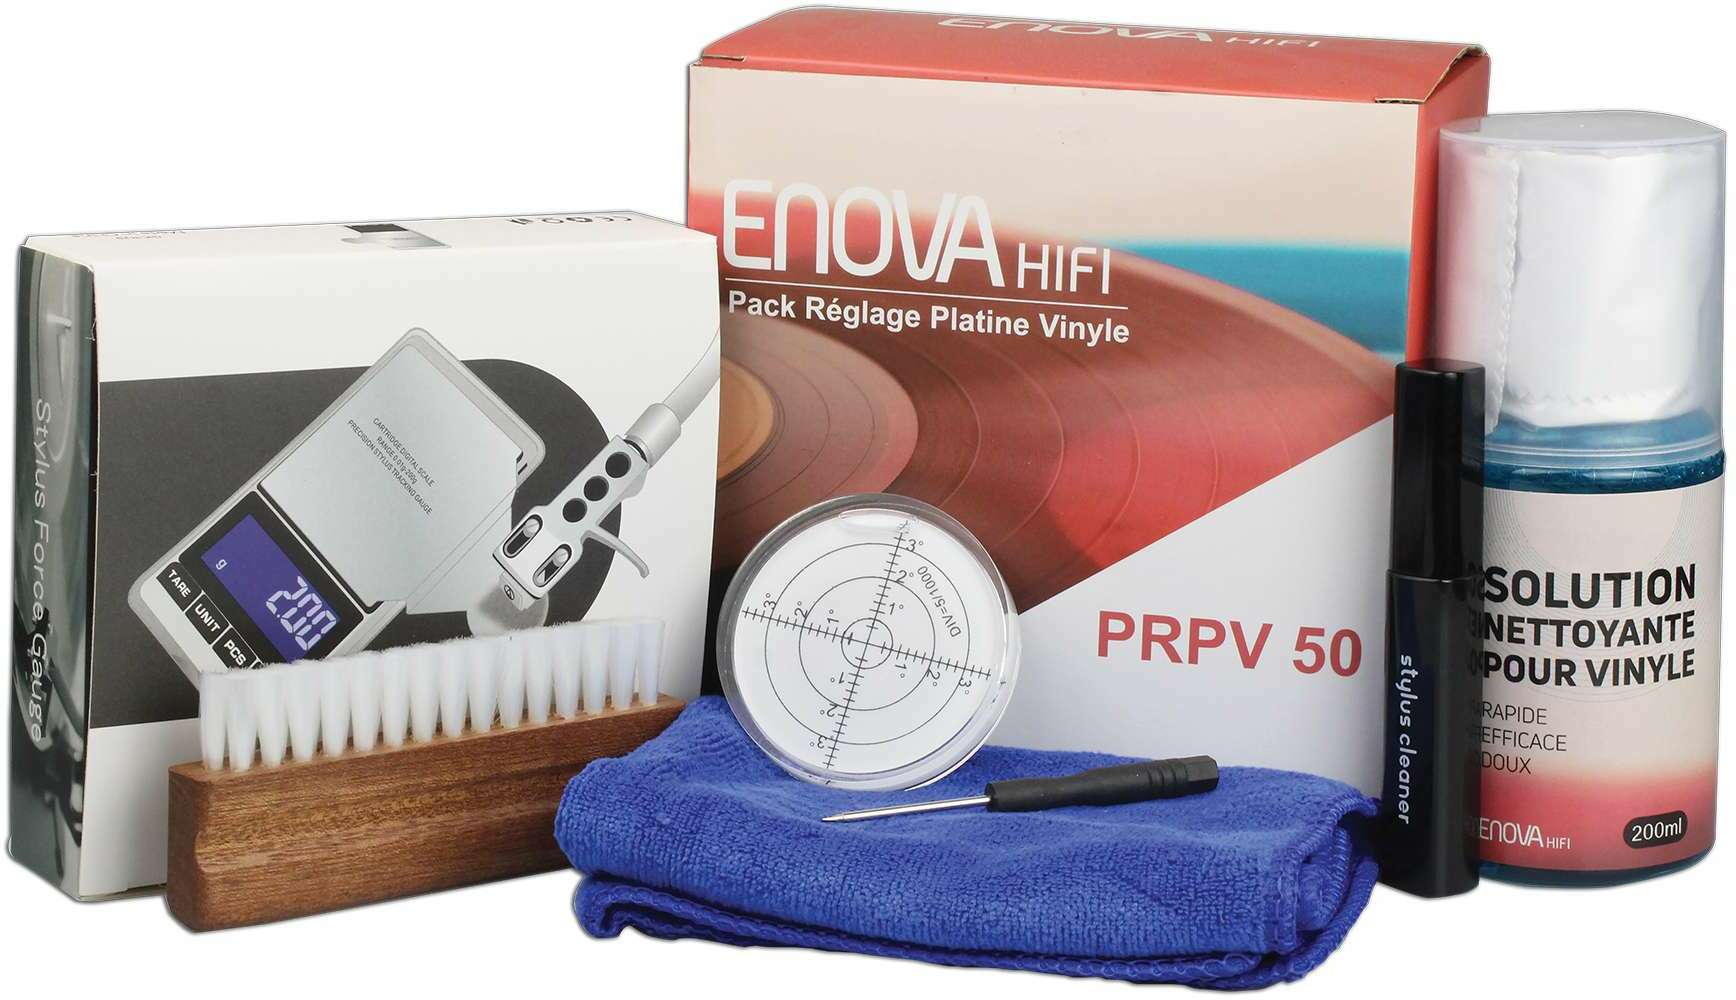 Enova Hifi Pack Reglage Platine Vinyle - Prpv 50 - Kit de limpieza - Main picture